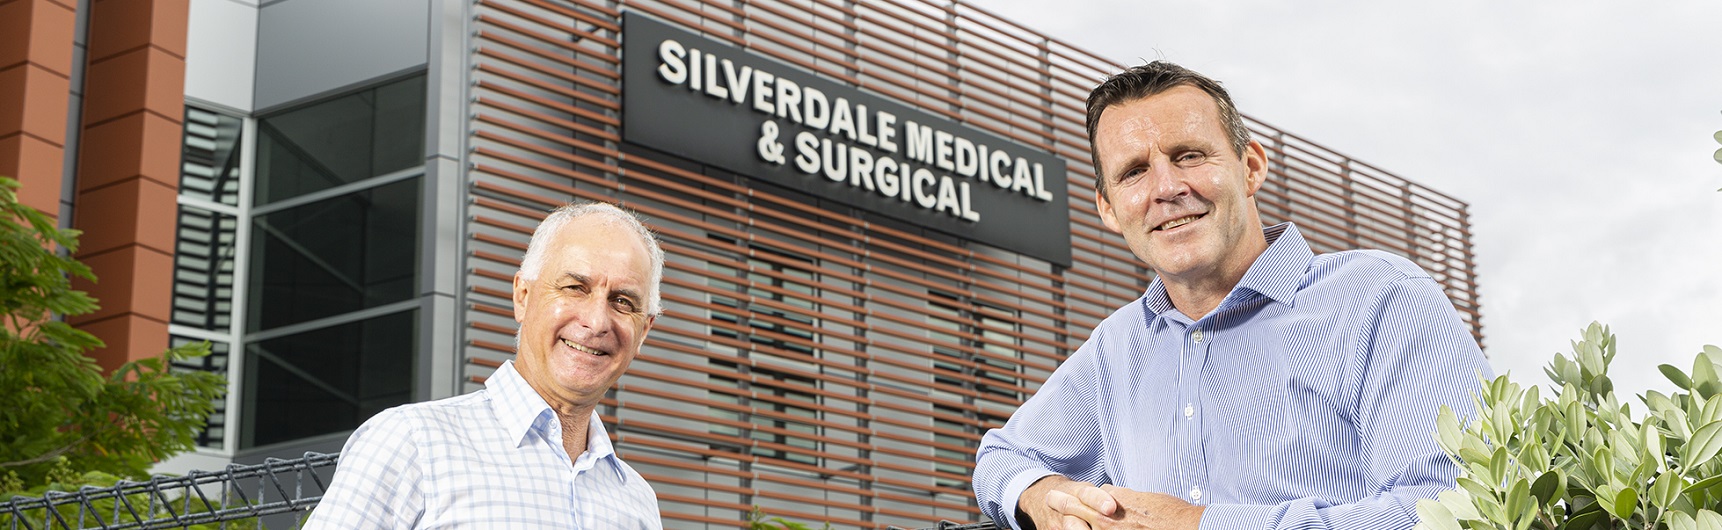 Silverdale medical_hero